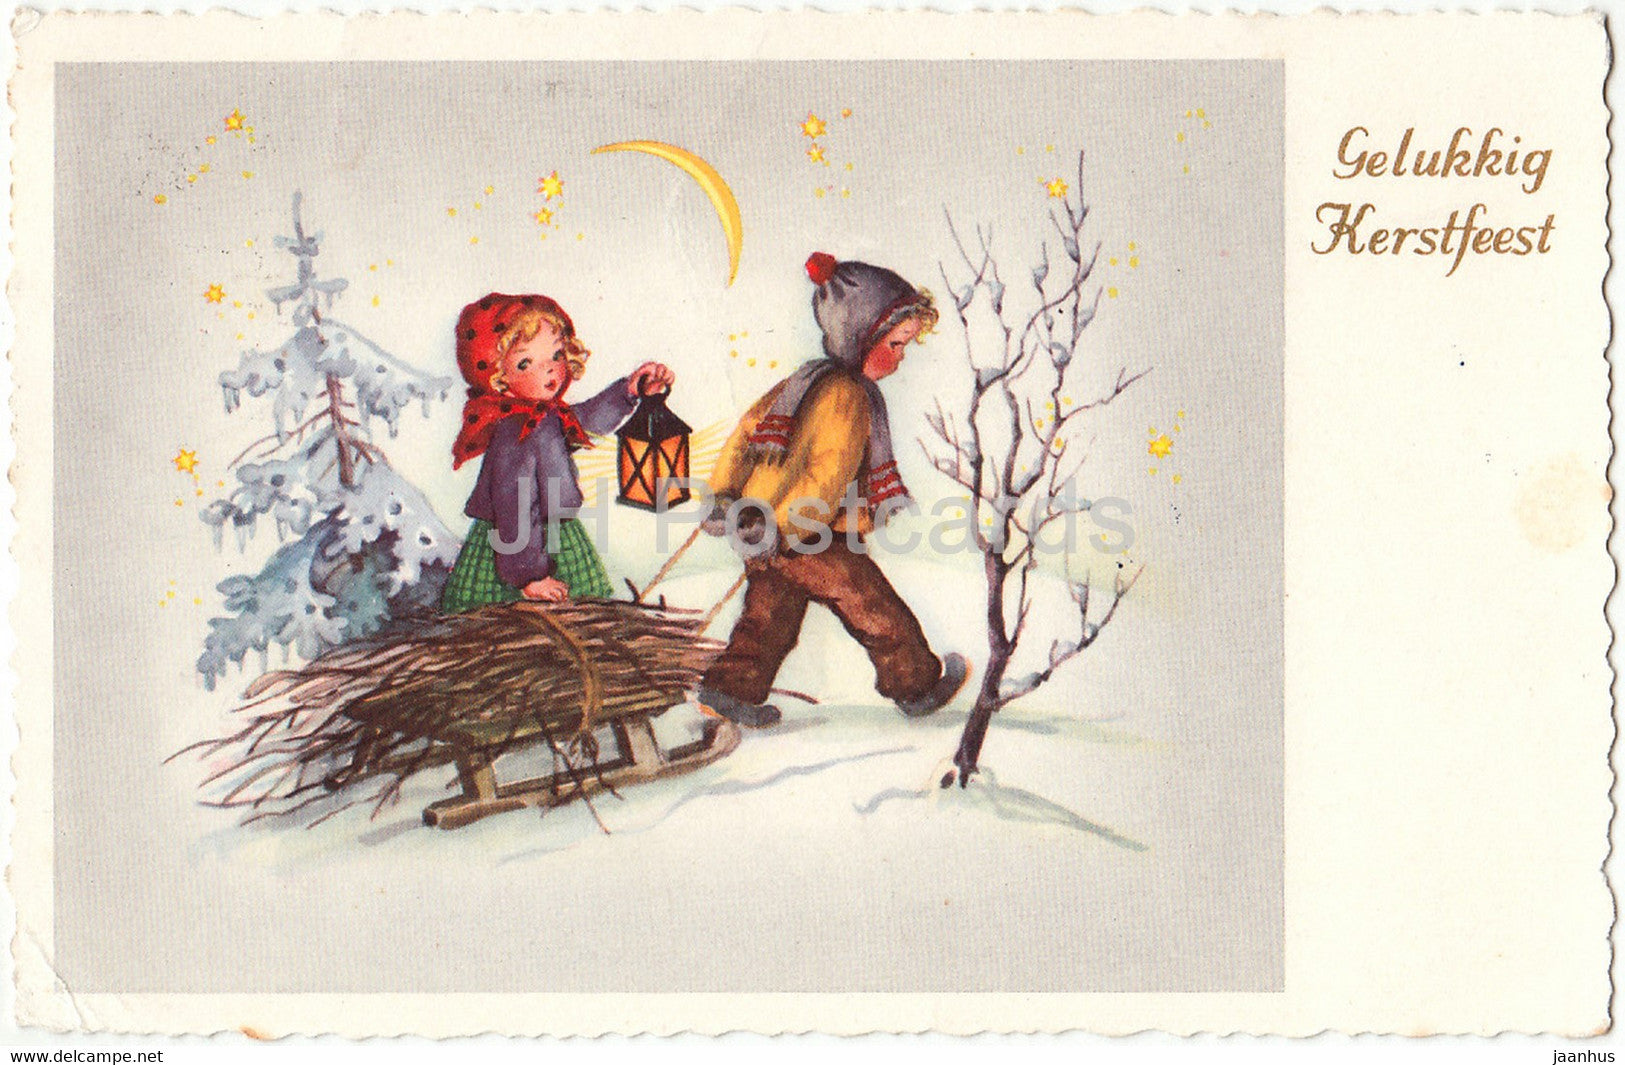 Christmas Greeting Card - Gelukkig Kerstfeest - boy and girl - sledge - old postcard - 1950s - Netherlands - used - JH Postcards